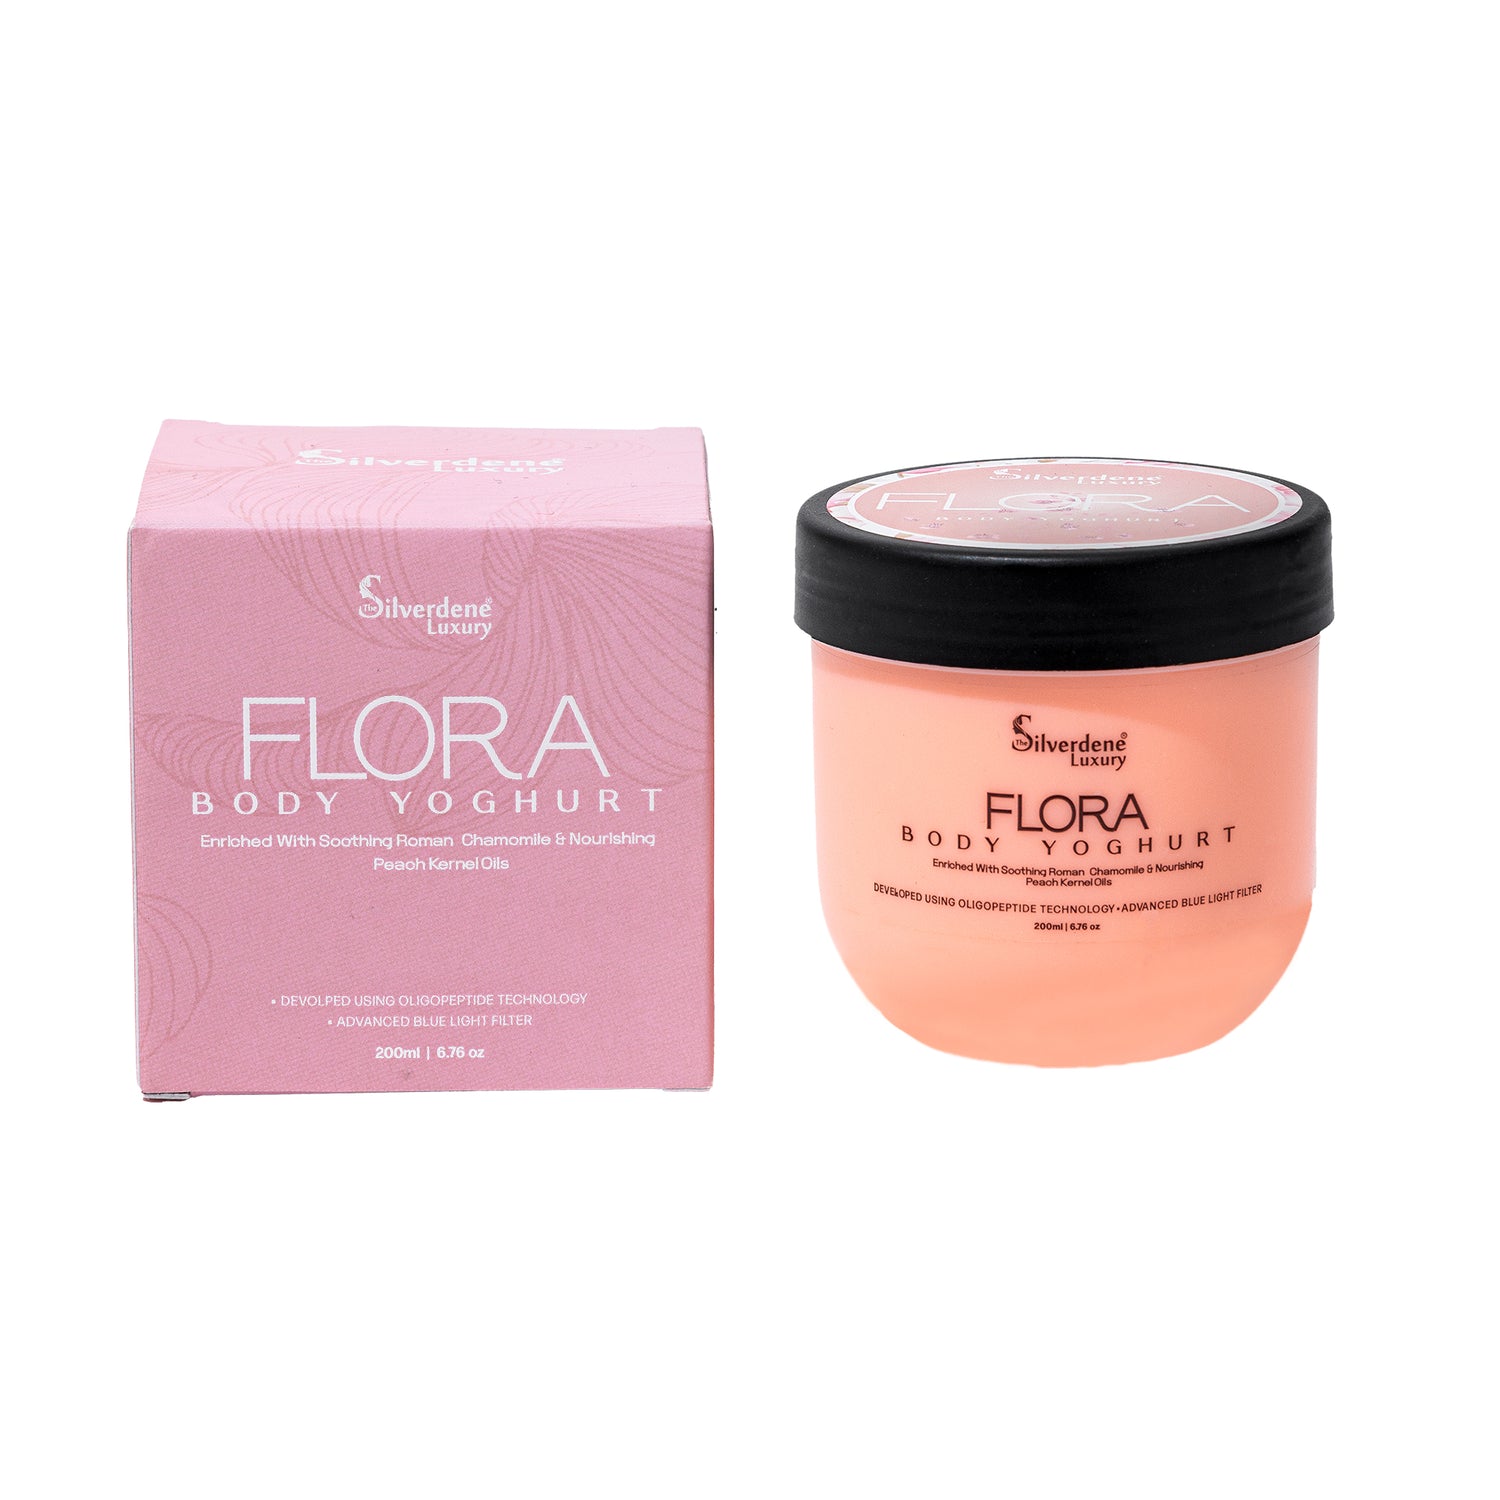 Flora Body Yoghurt